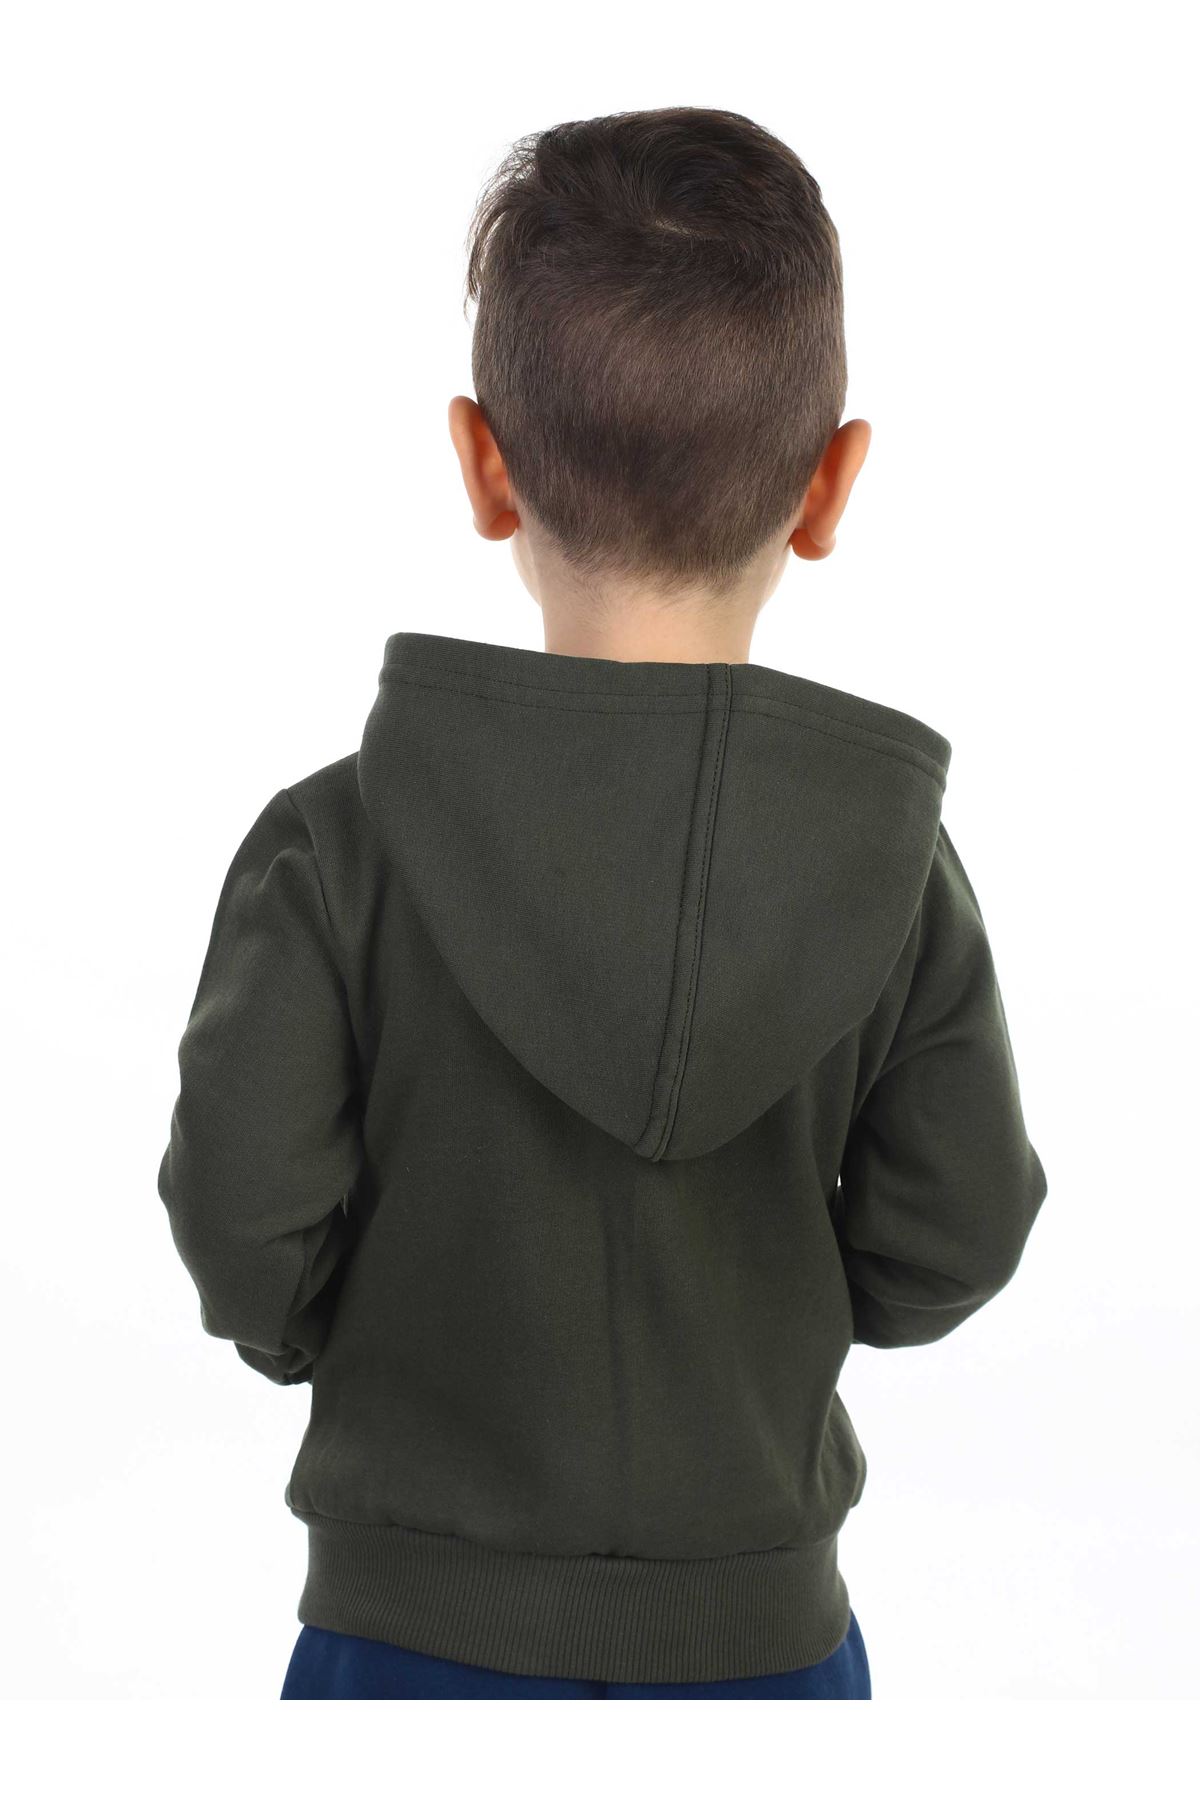 Khaki Seasonal Male Child Jacket